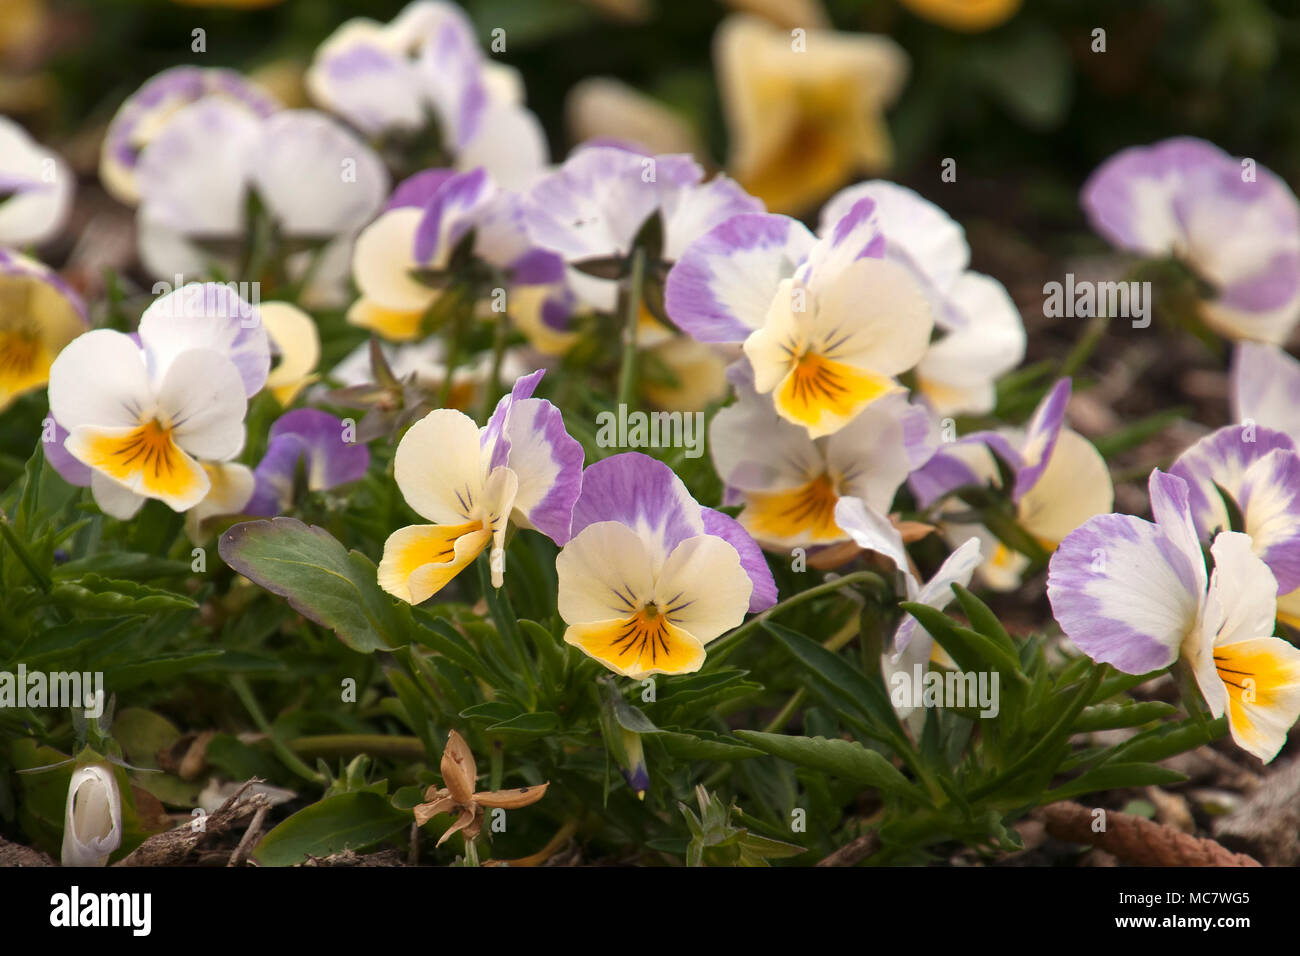 Sydney Australia, flowerbed of cream, mauve and yellow pansies Stock Photo